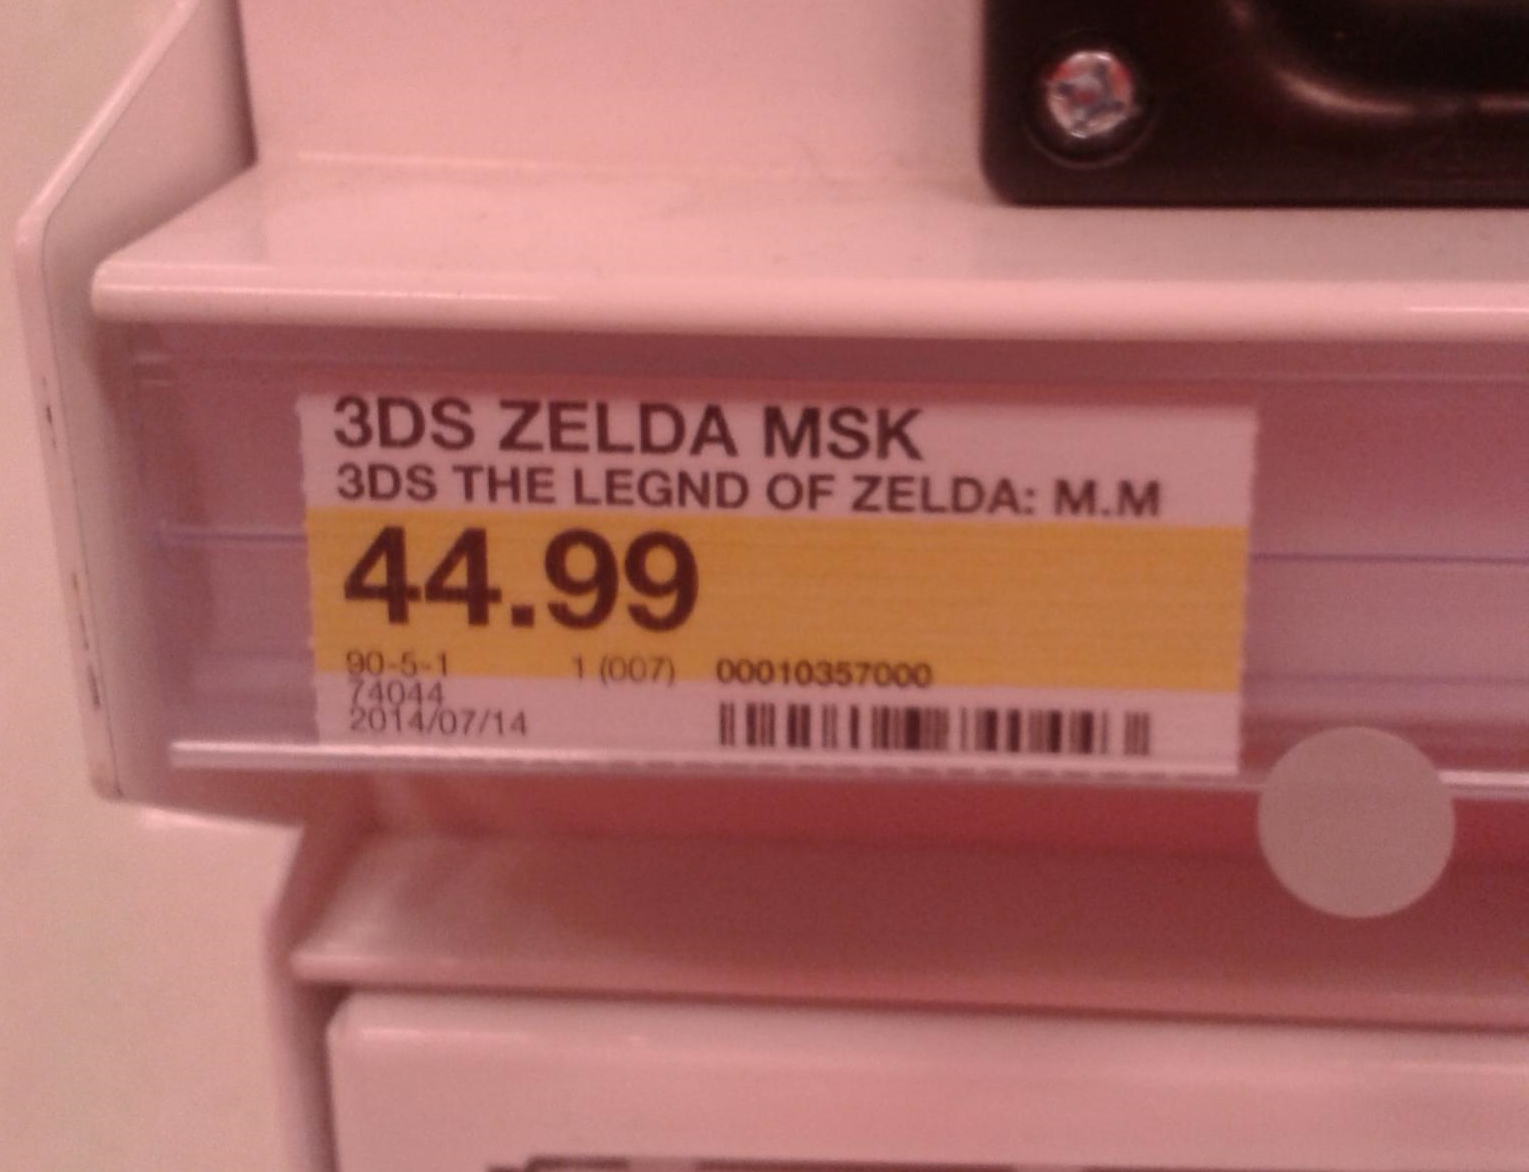 The Legend of Zelda: Majora’s Mask unintentionally leaked by Target?